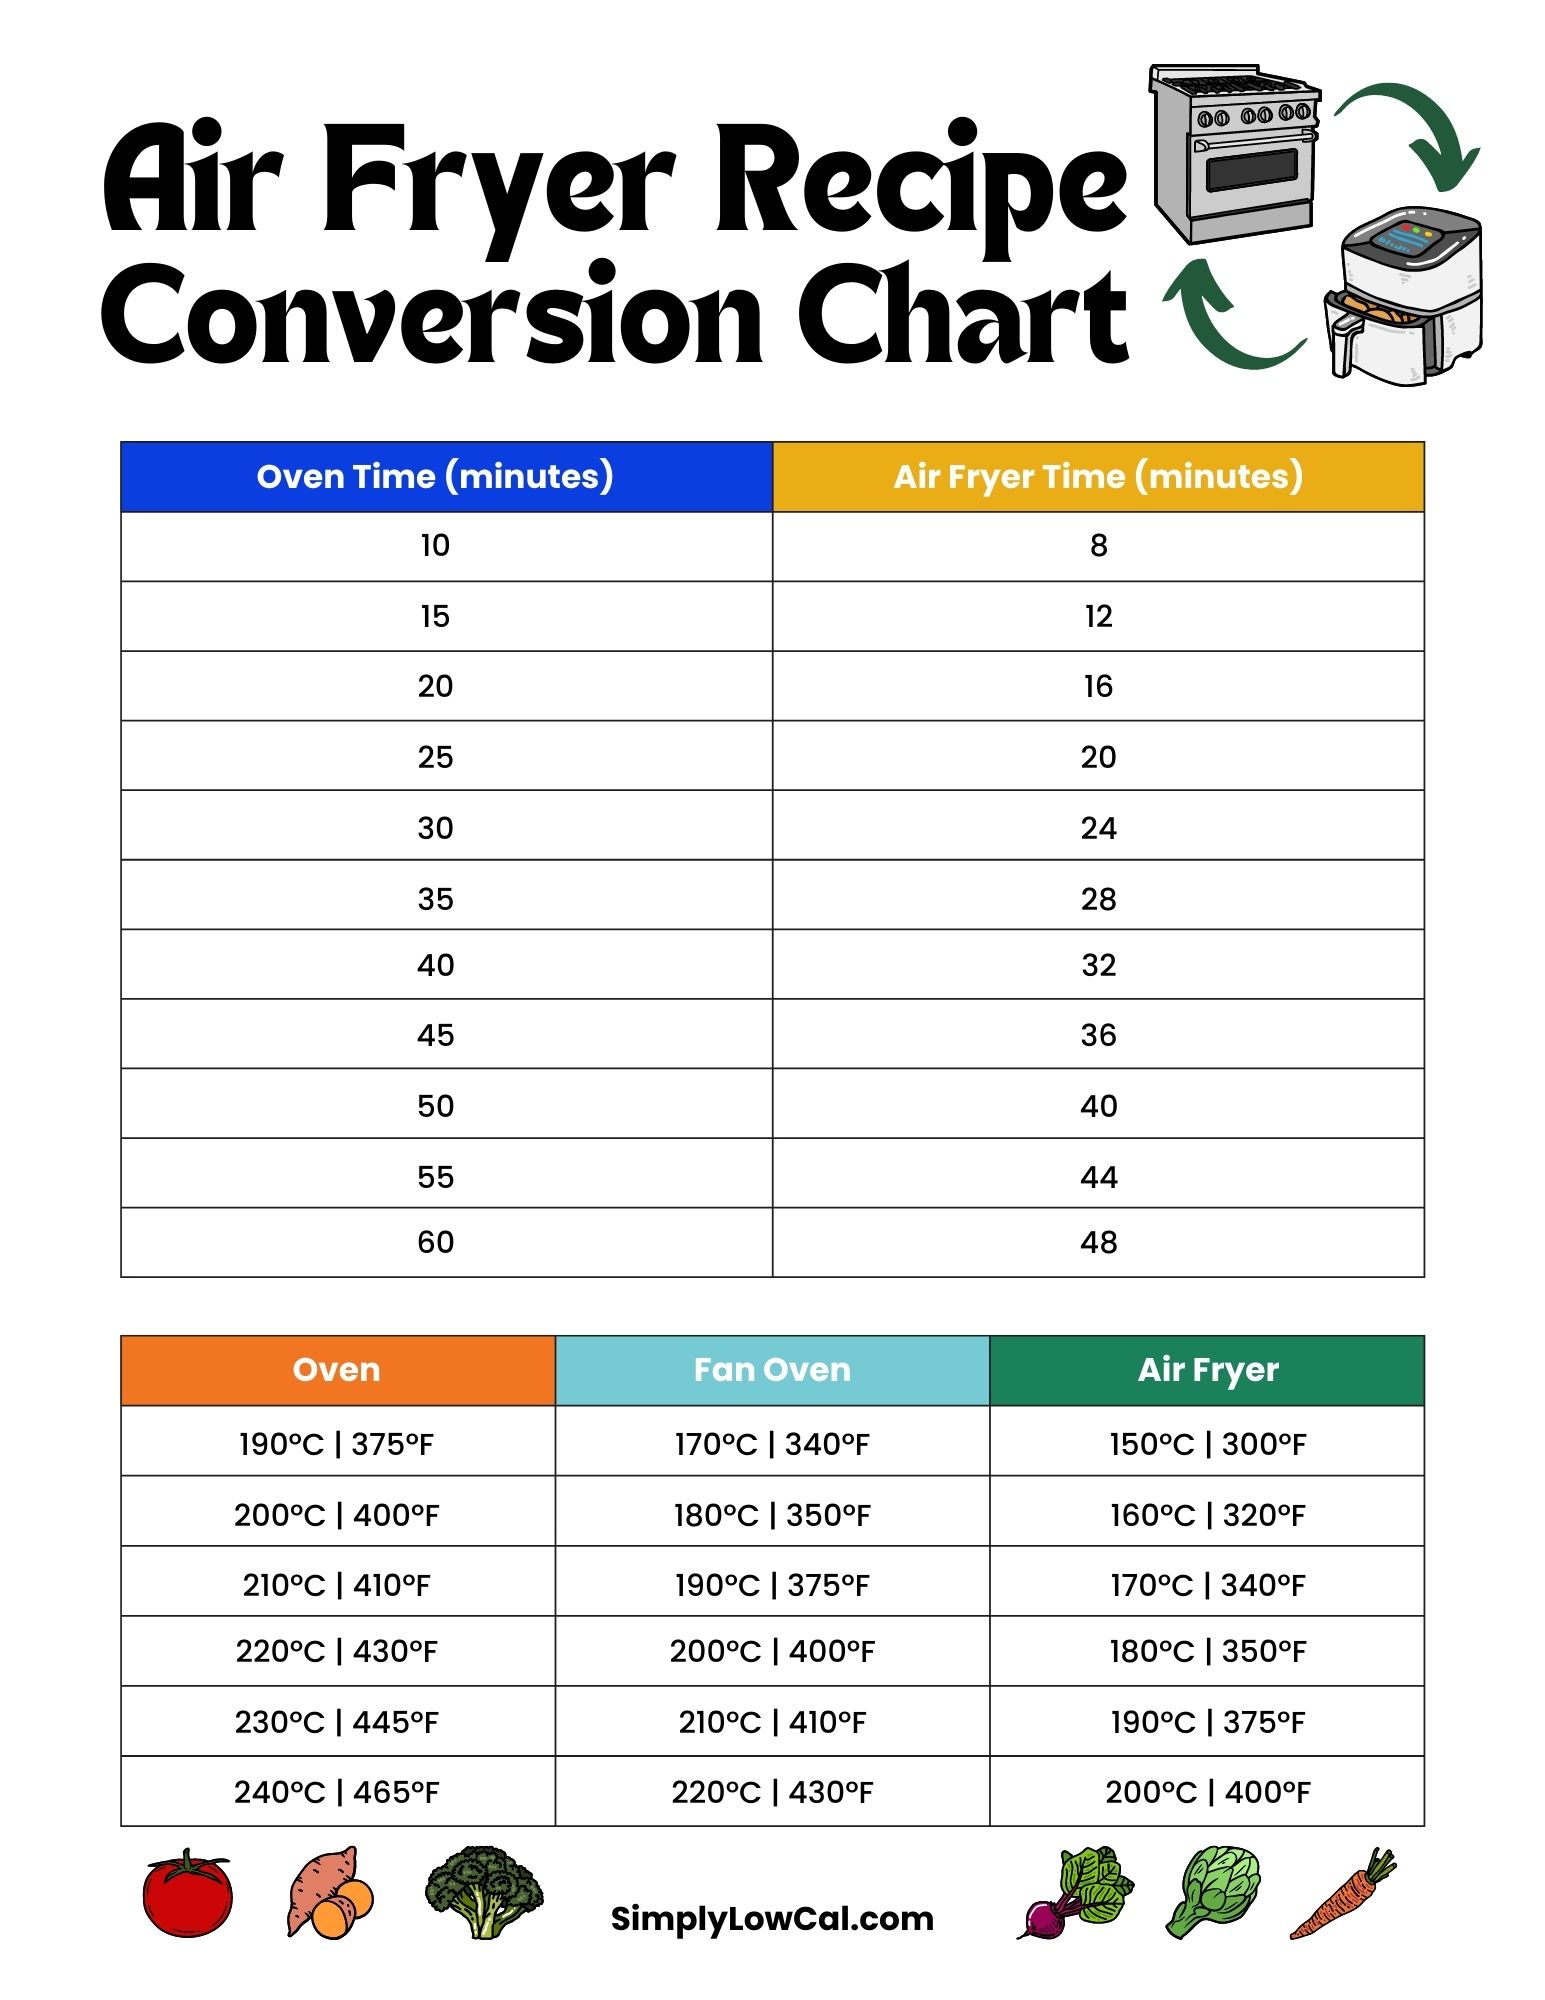 Air fryer conversion chart.